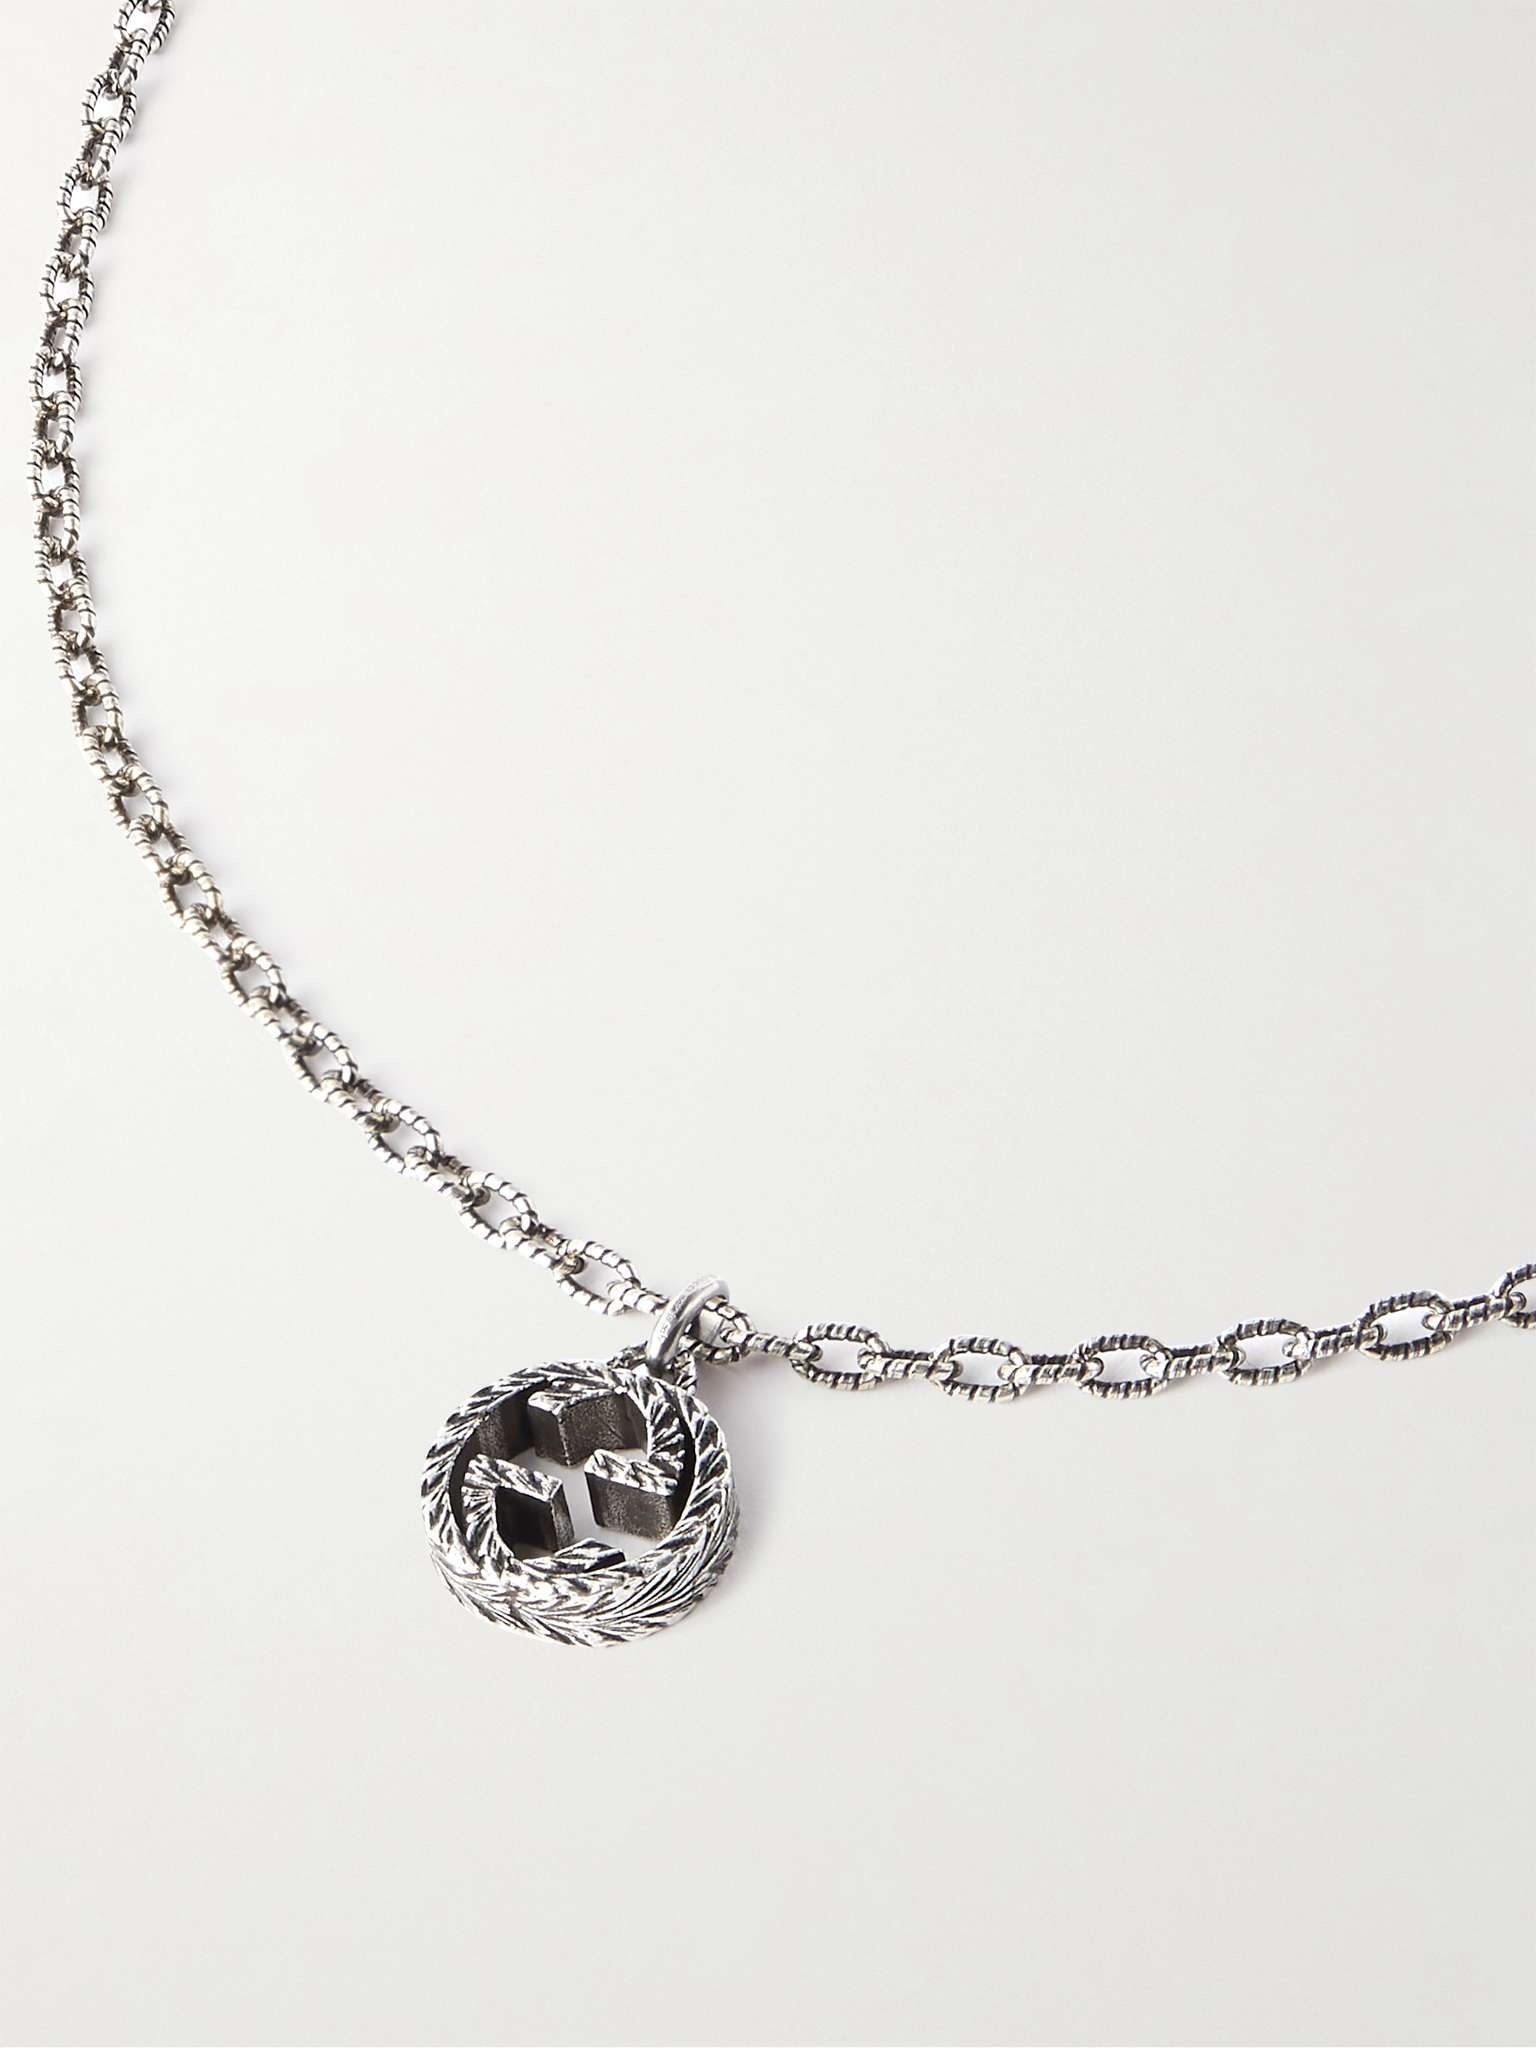 Burnished Sterling Silver Pendant Necklace - 4